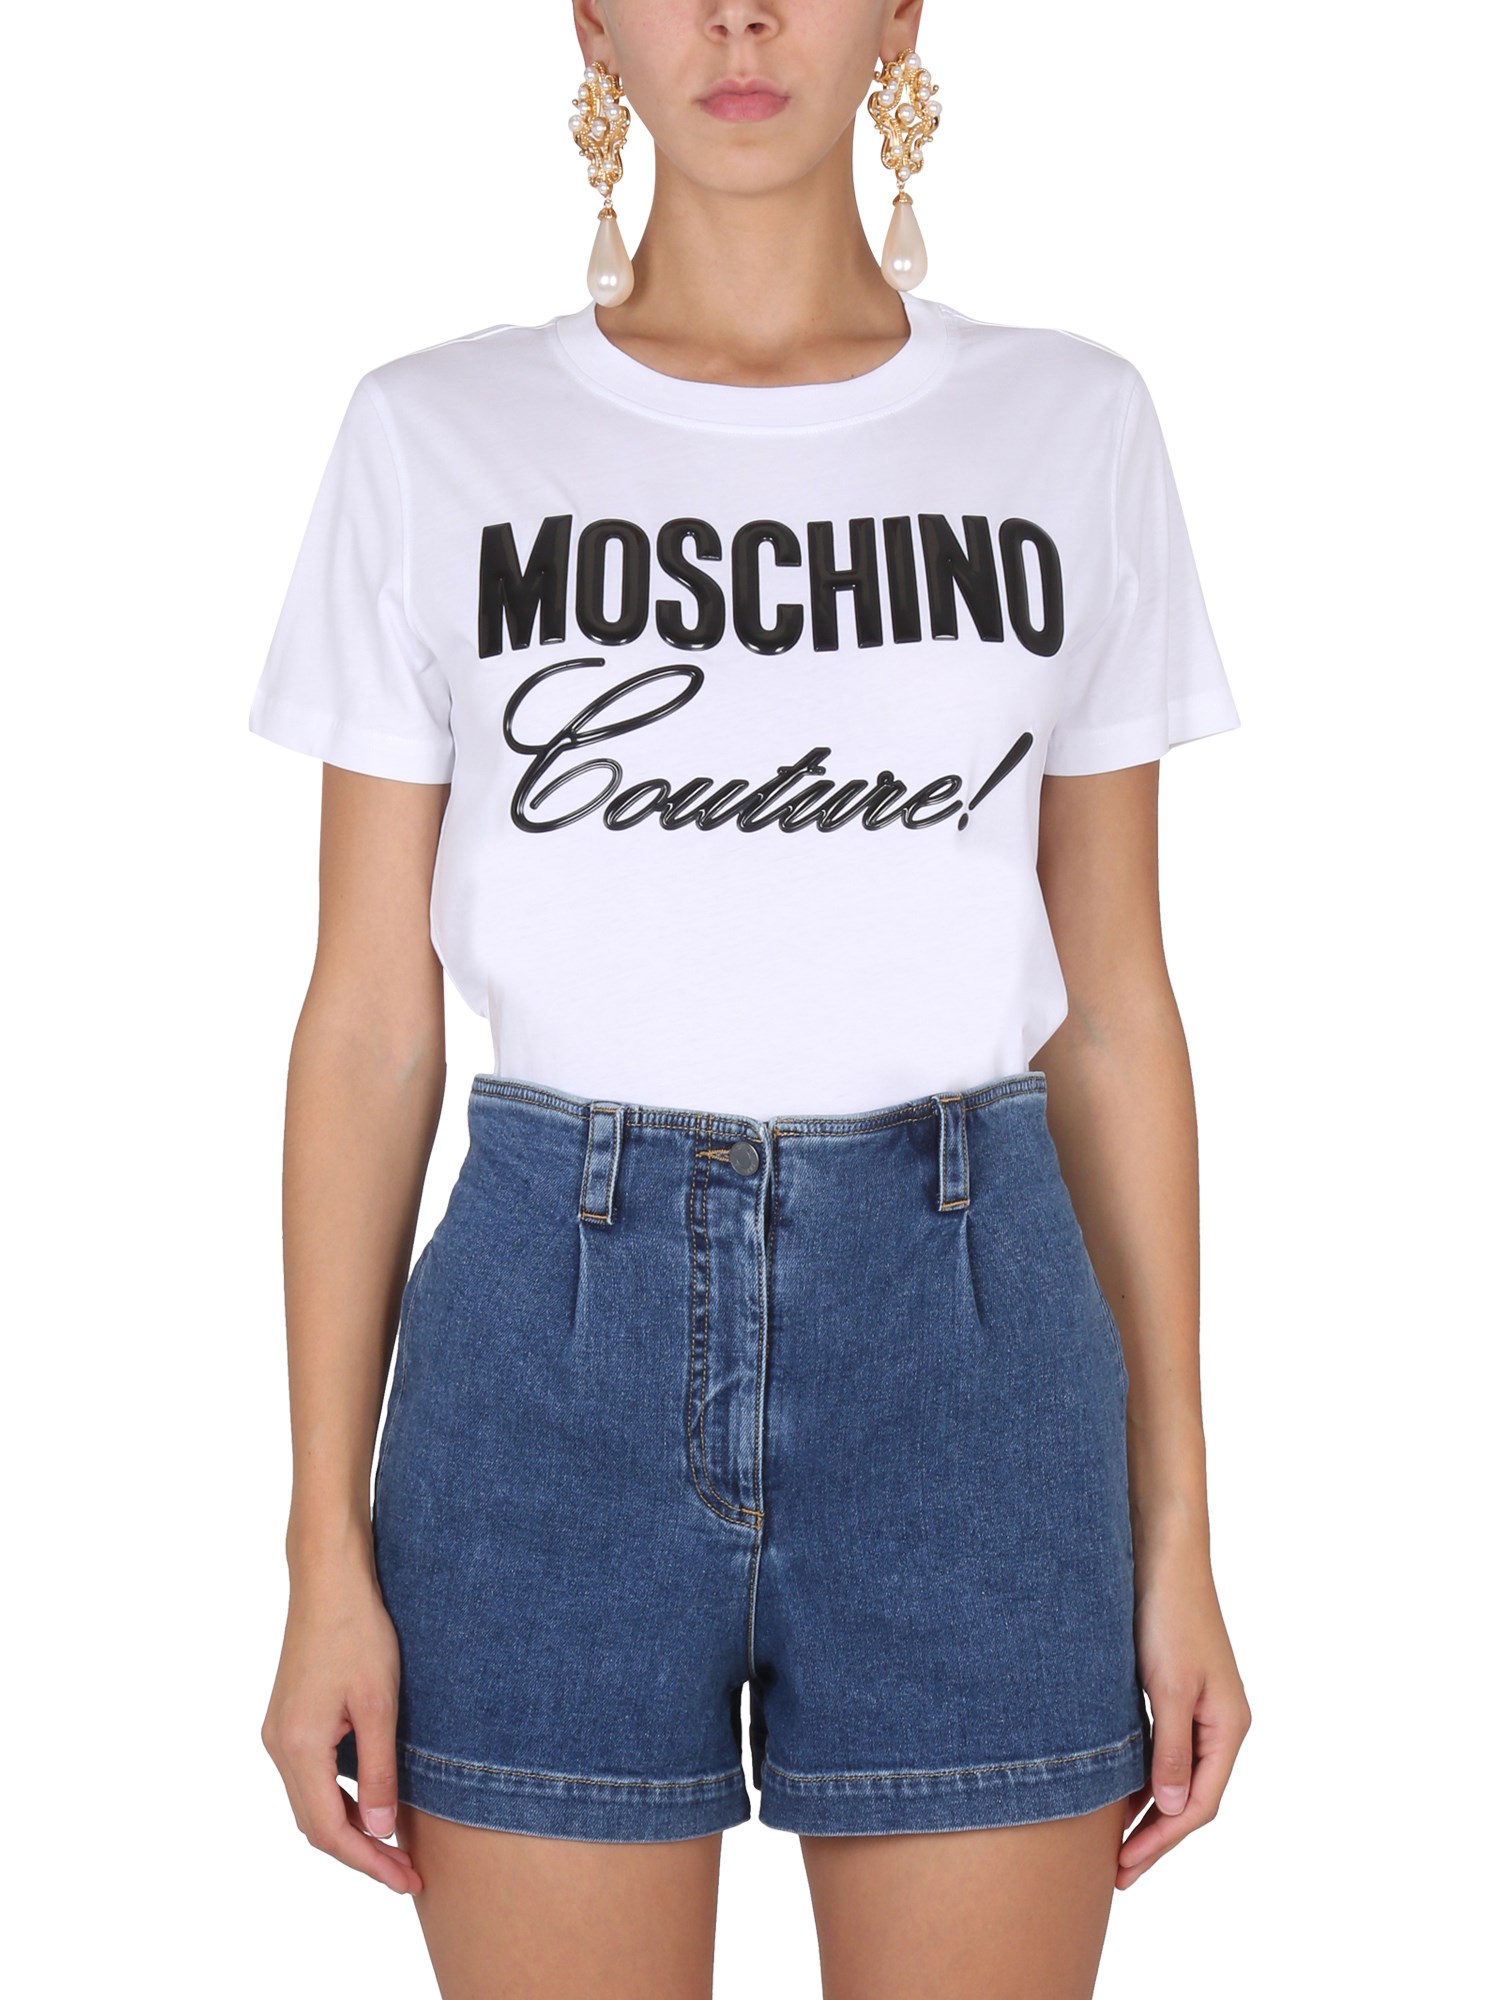 moschino crewneck t-shirt